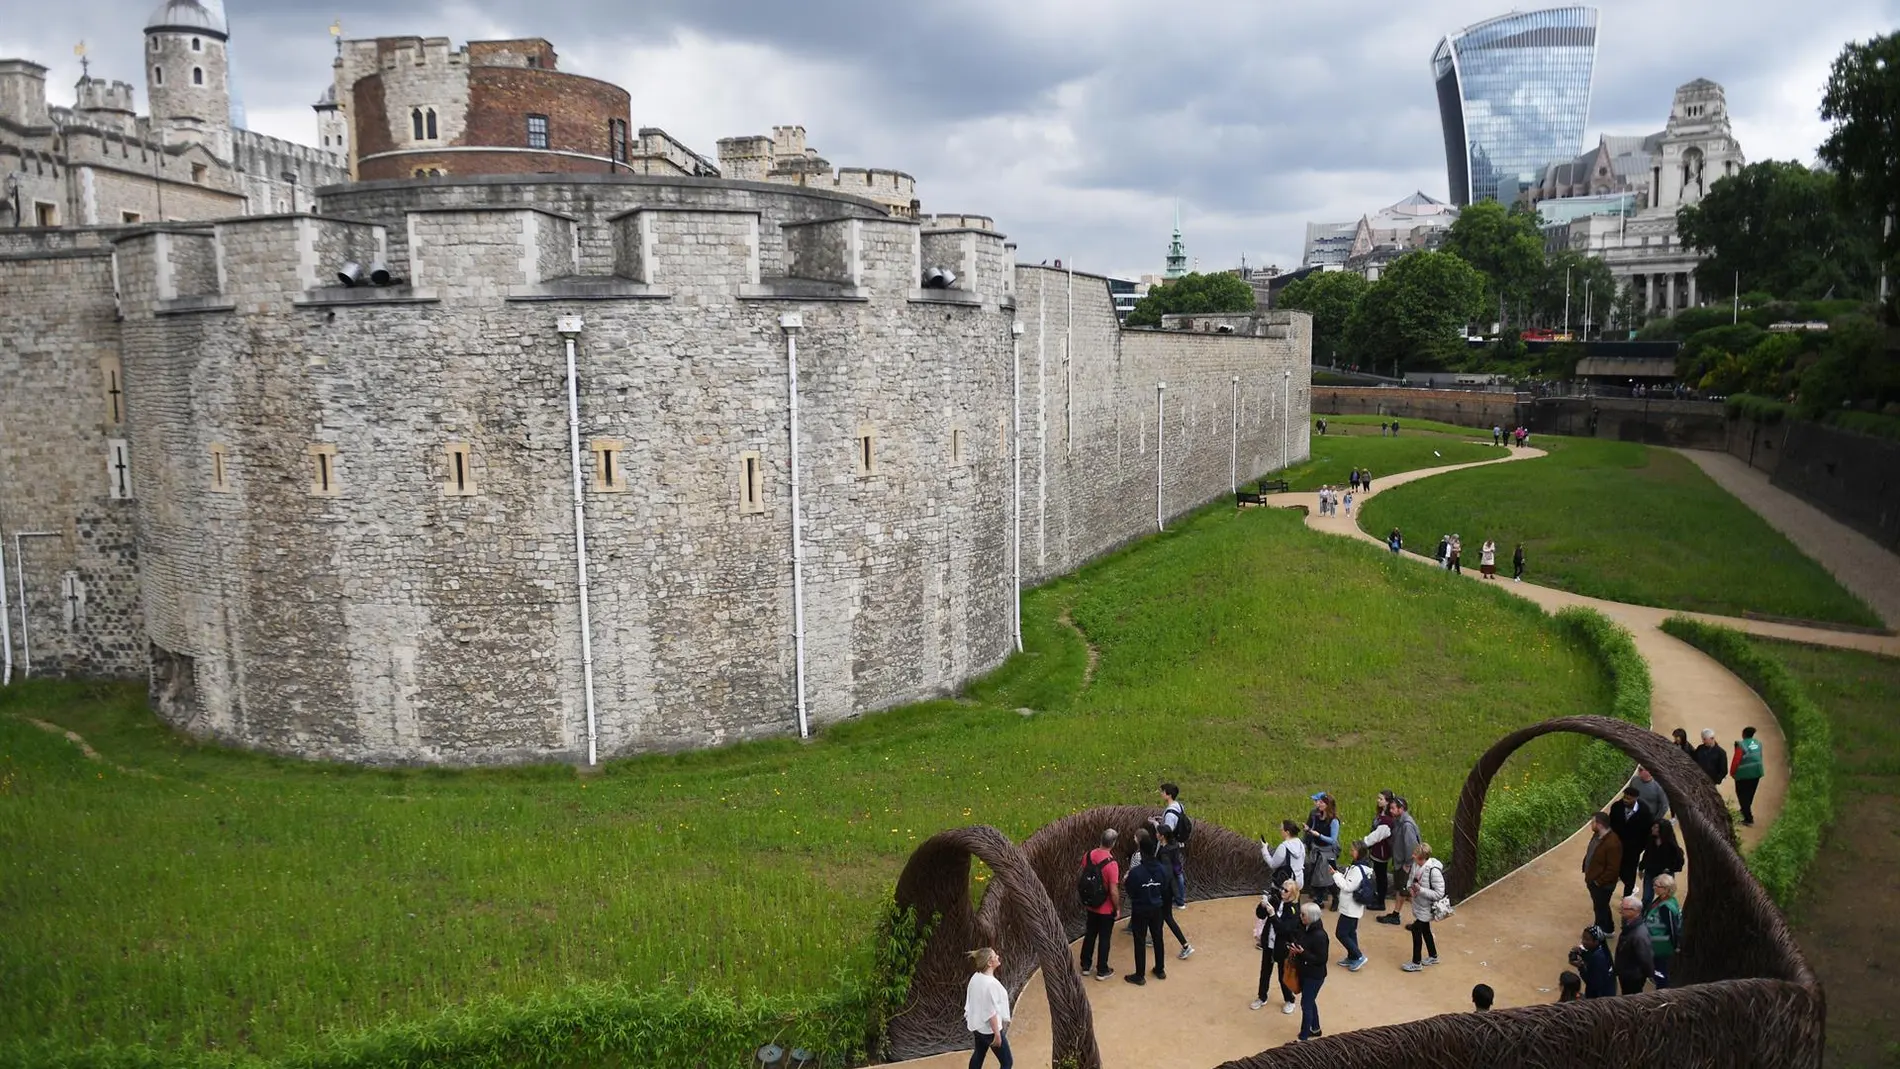 El "Superbloom" en la Torre de Londres para celebrar el Jubileo de la reina Isabel II